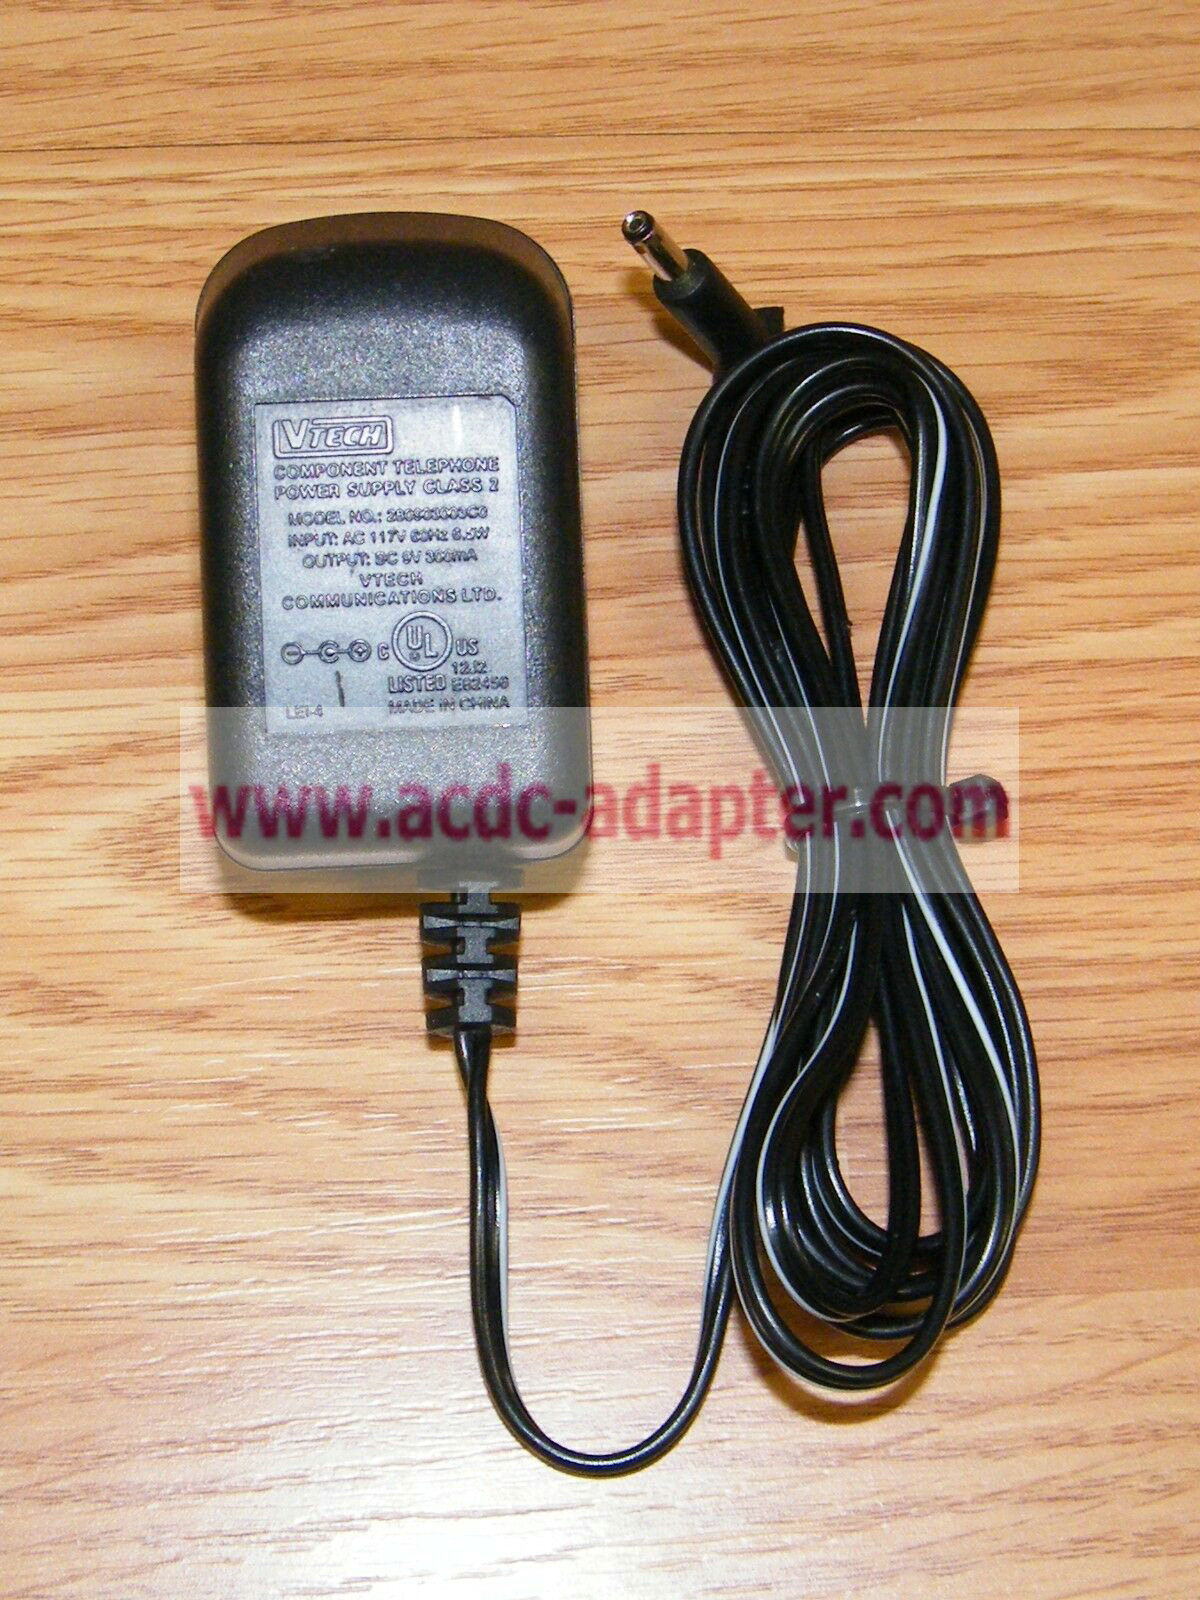 Genuine 9V 300mA ac adapter Vtech 280903003C0 Component Telephone Power Supply - Click Image to Close